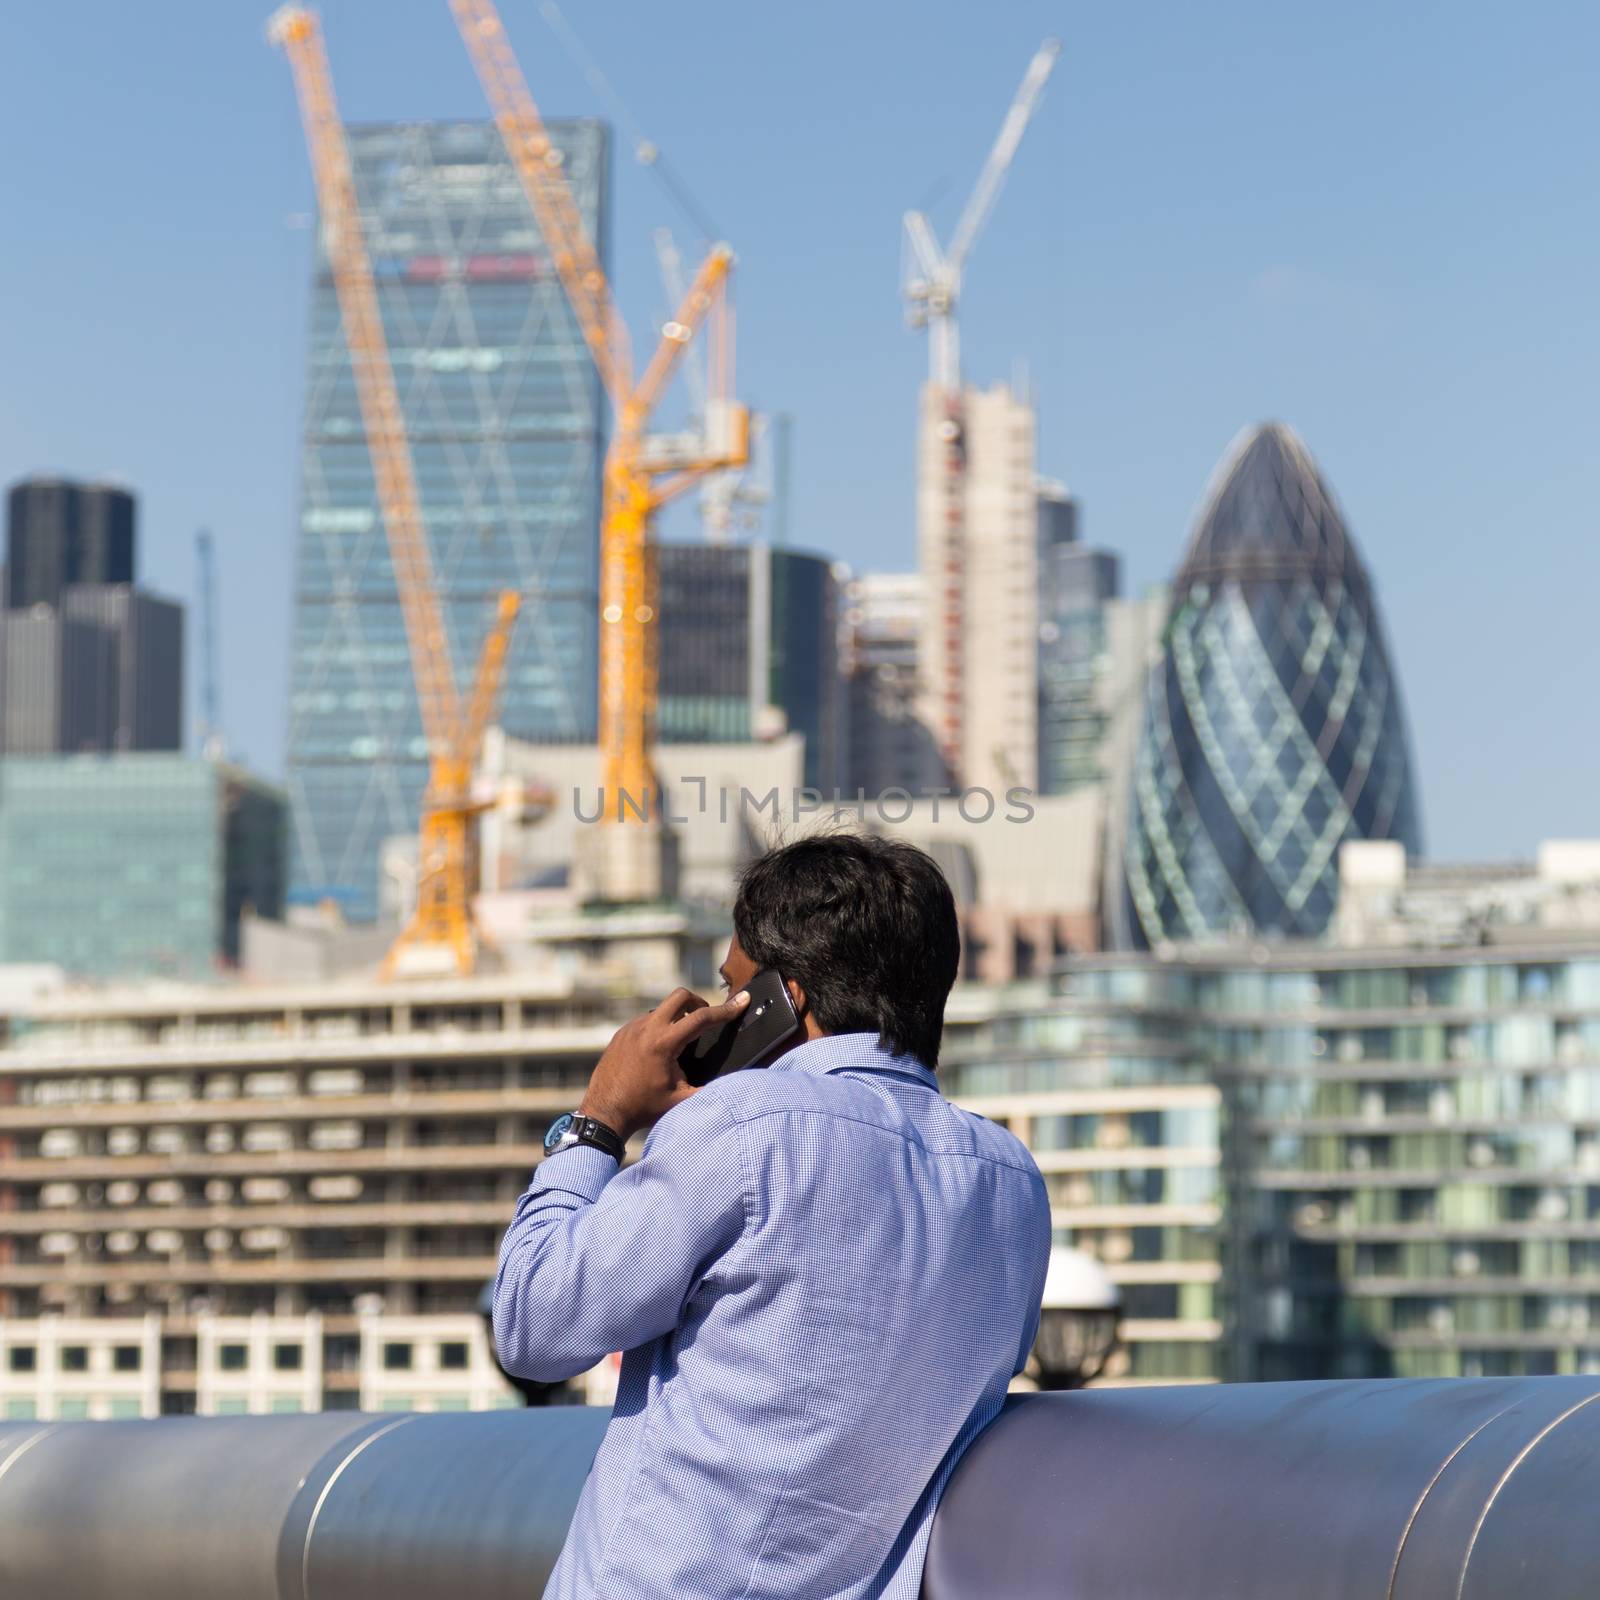 International businessman talking on mobile phone outdoor, looking at modern skyscrapers in London city, UK.